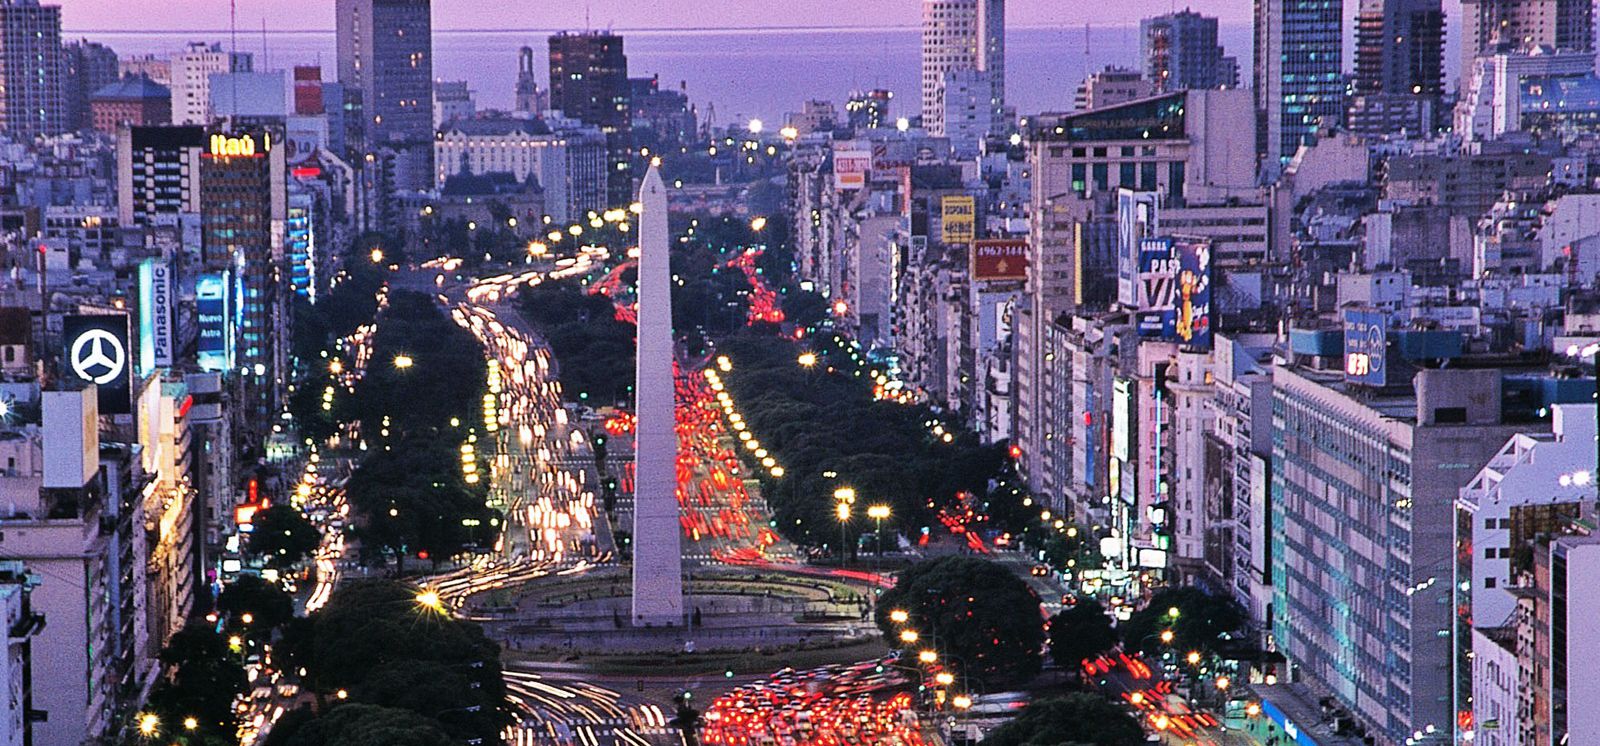 O Obelisco de Buenos Aires hoje